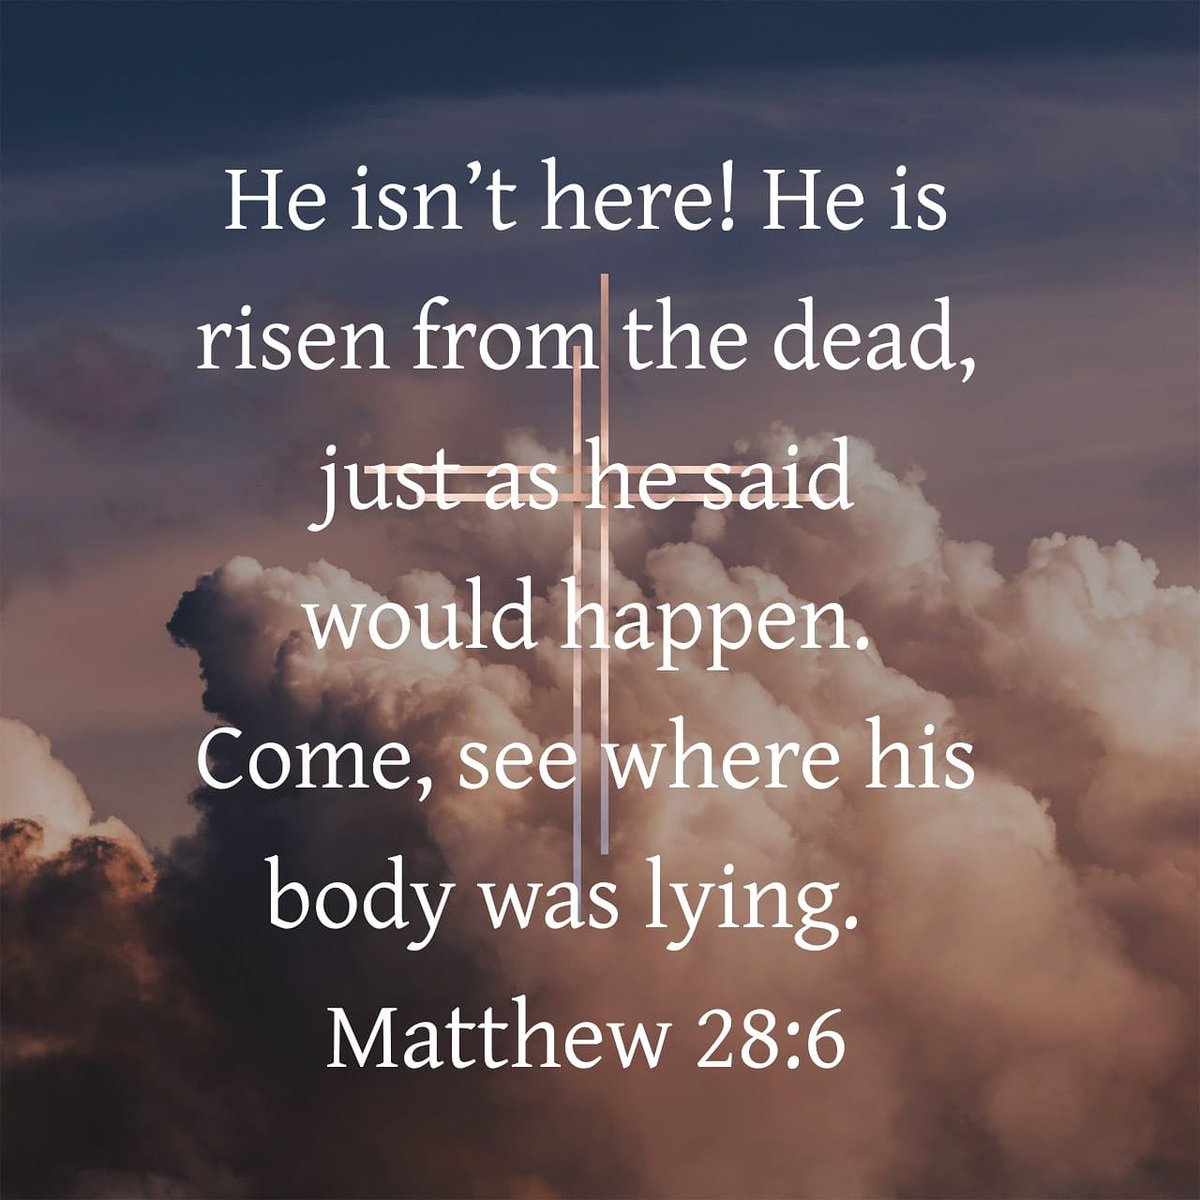 #lent #BetterTogether #powerofGodsword #GoodFriday #passionweek #Easter Hallelujah!